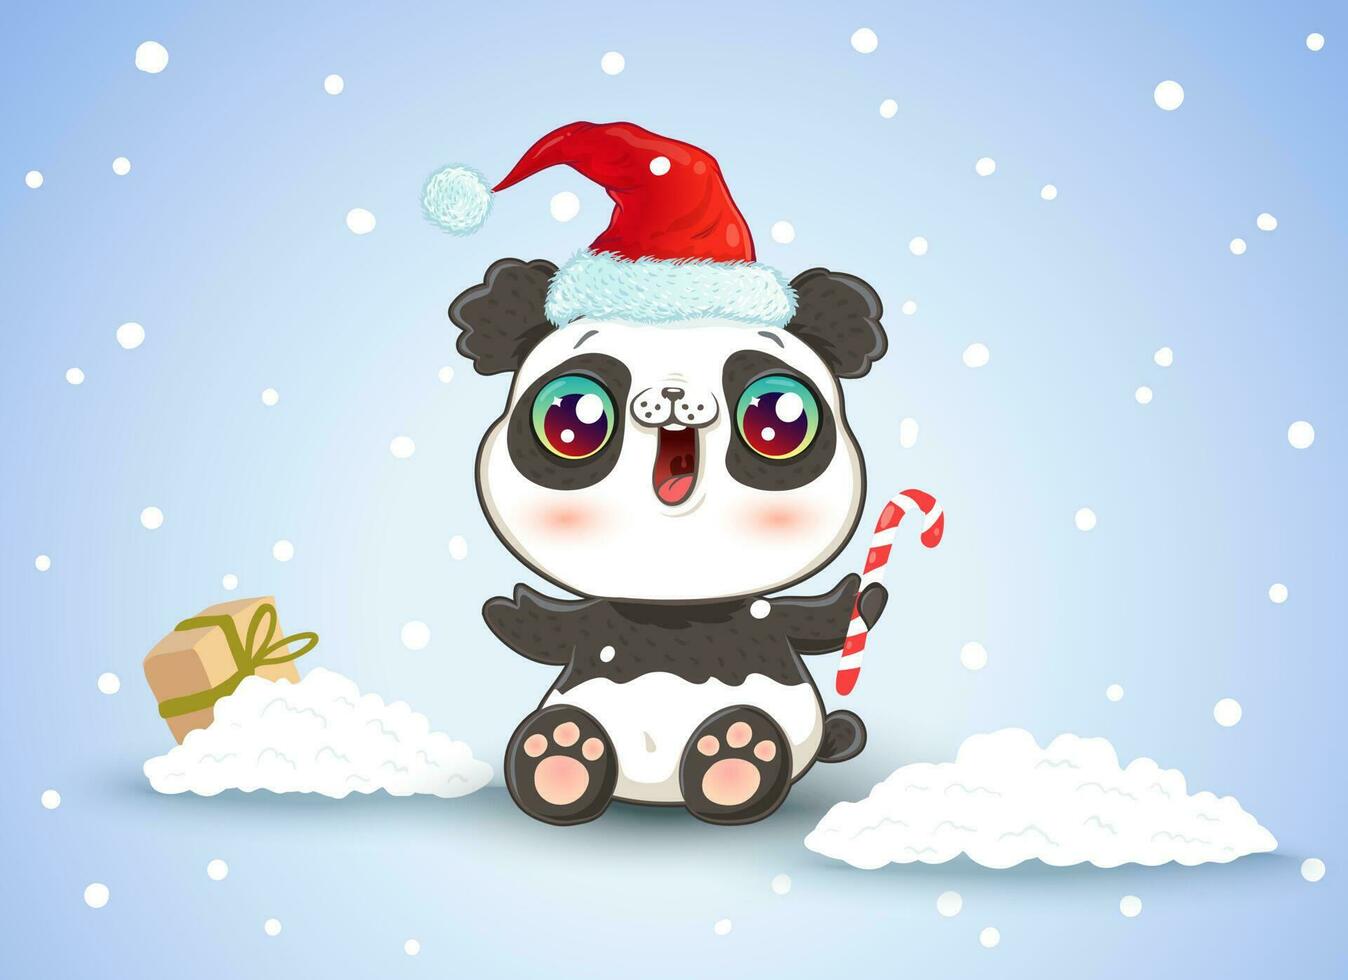 Panda on snow in kawaii style for Christmas vector